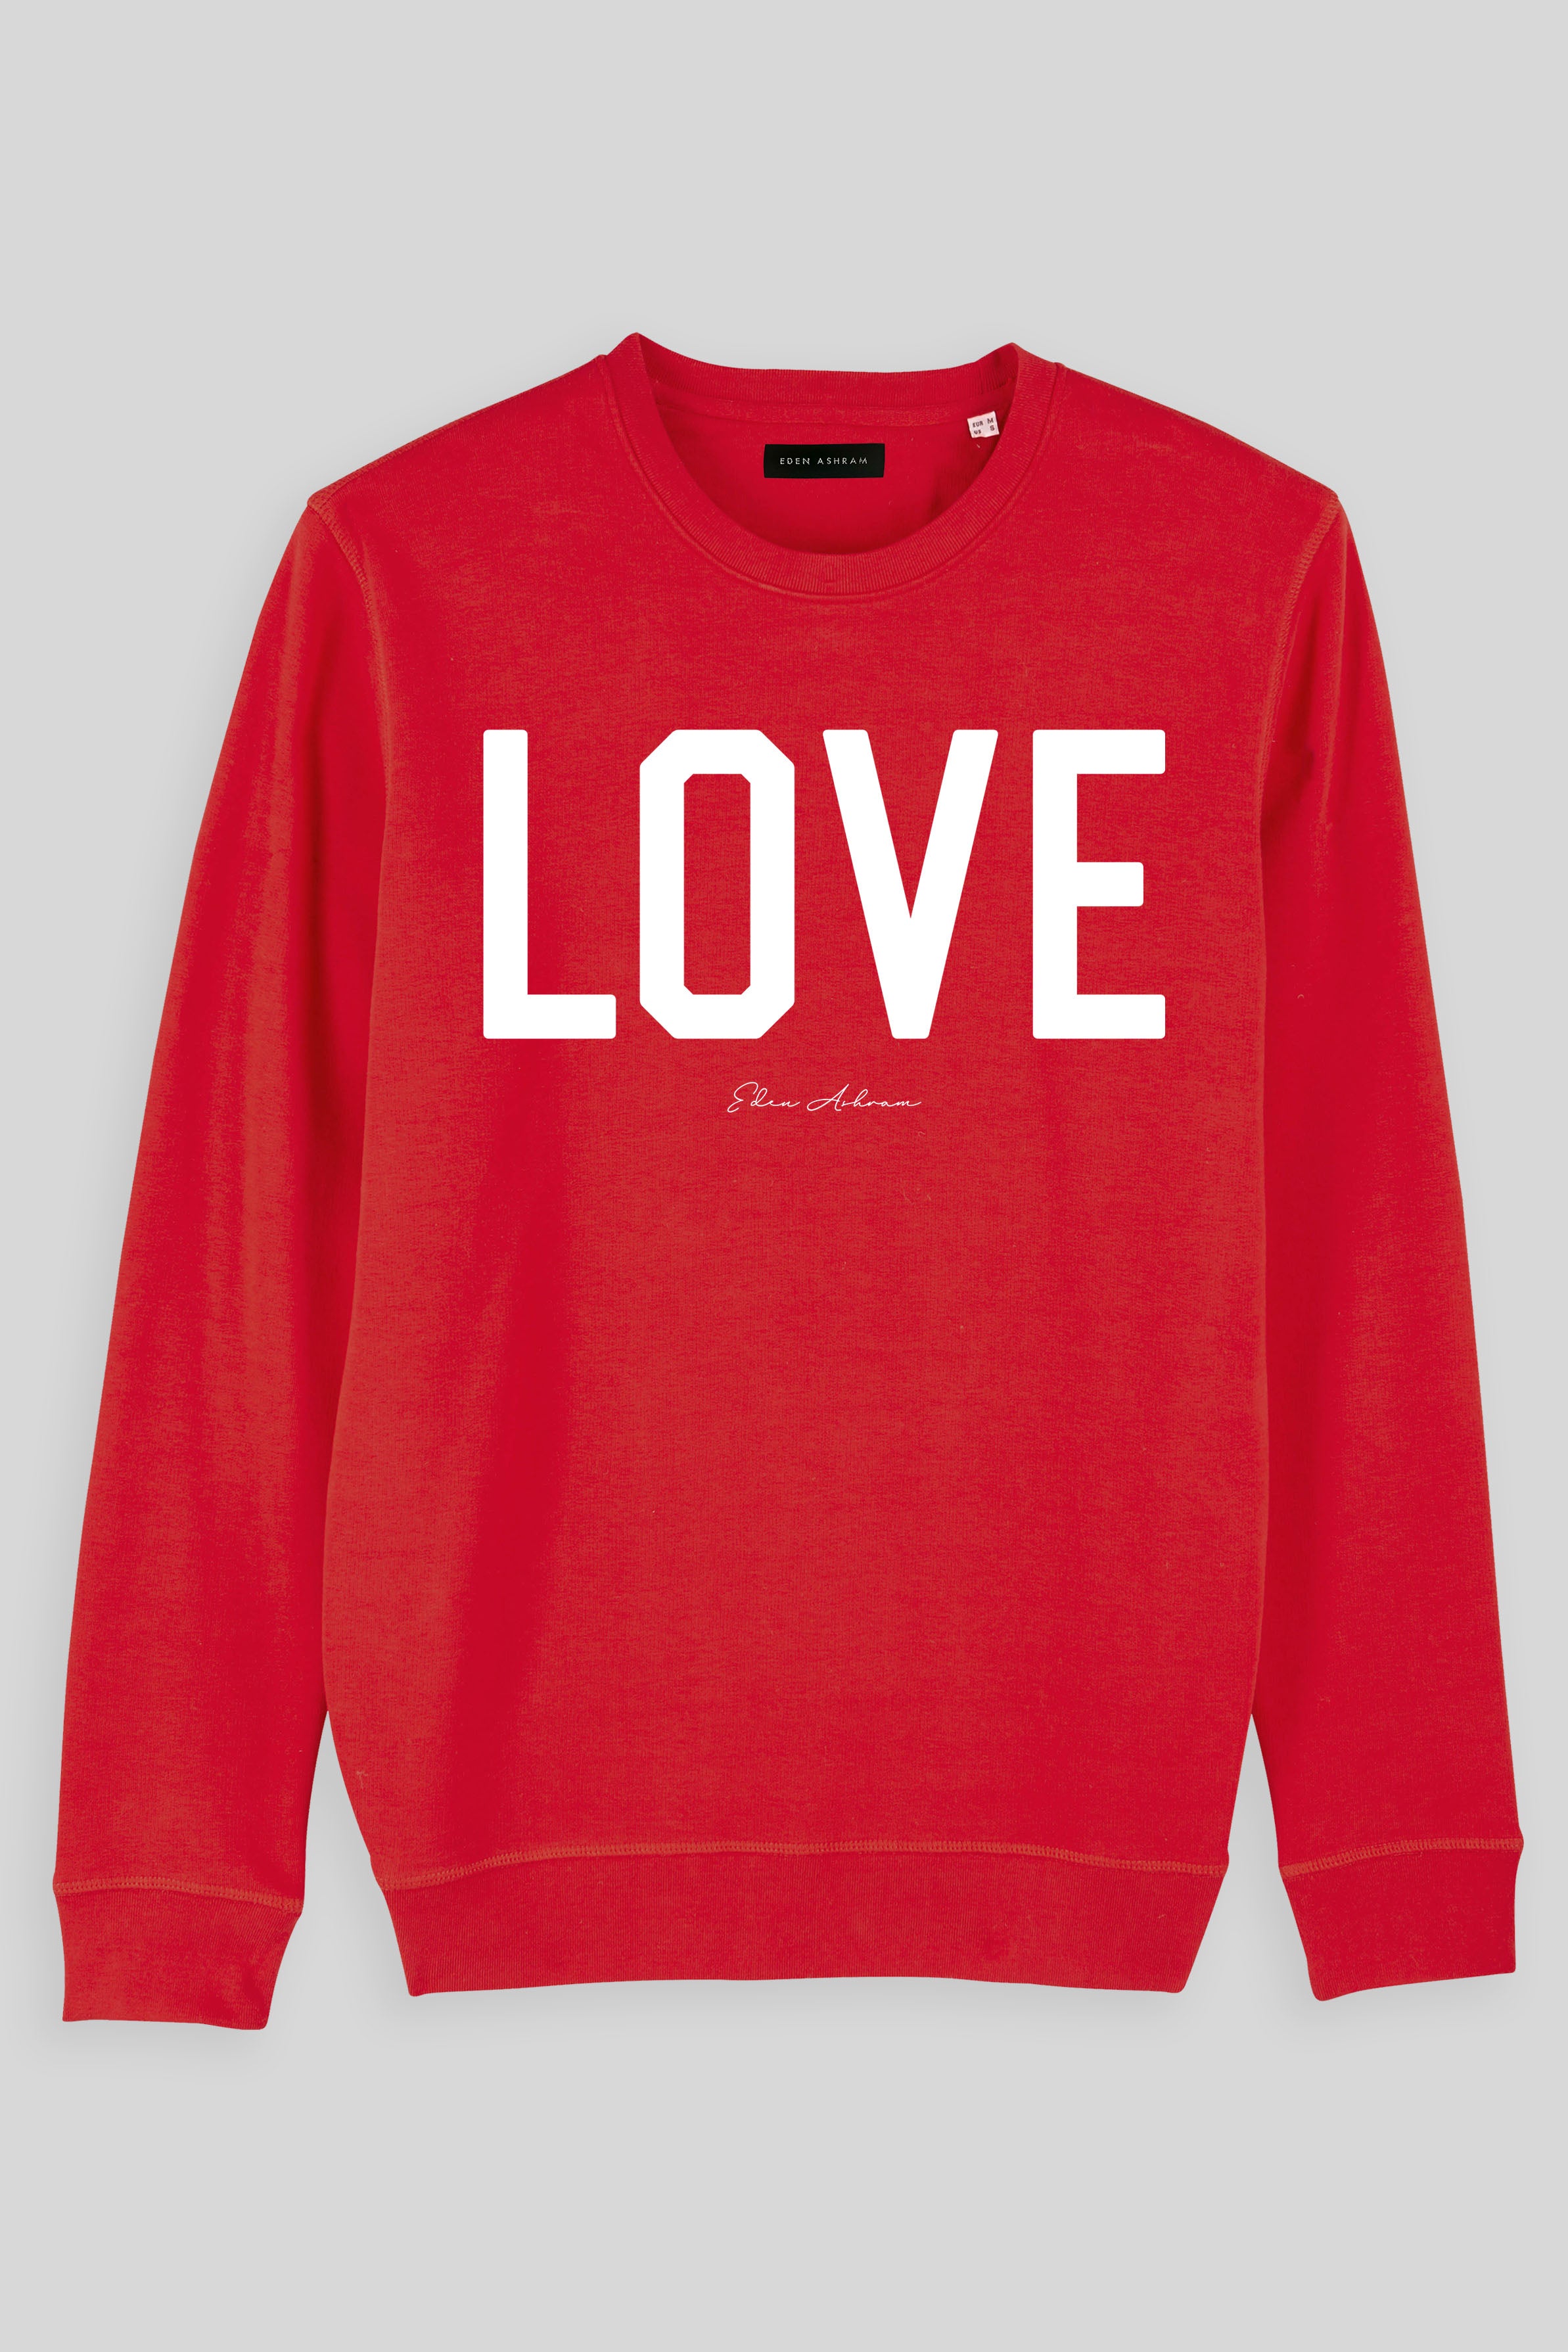 EDEN ASHRAM Love Premium Crew Neck Sweatshirt Red